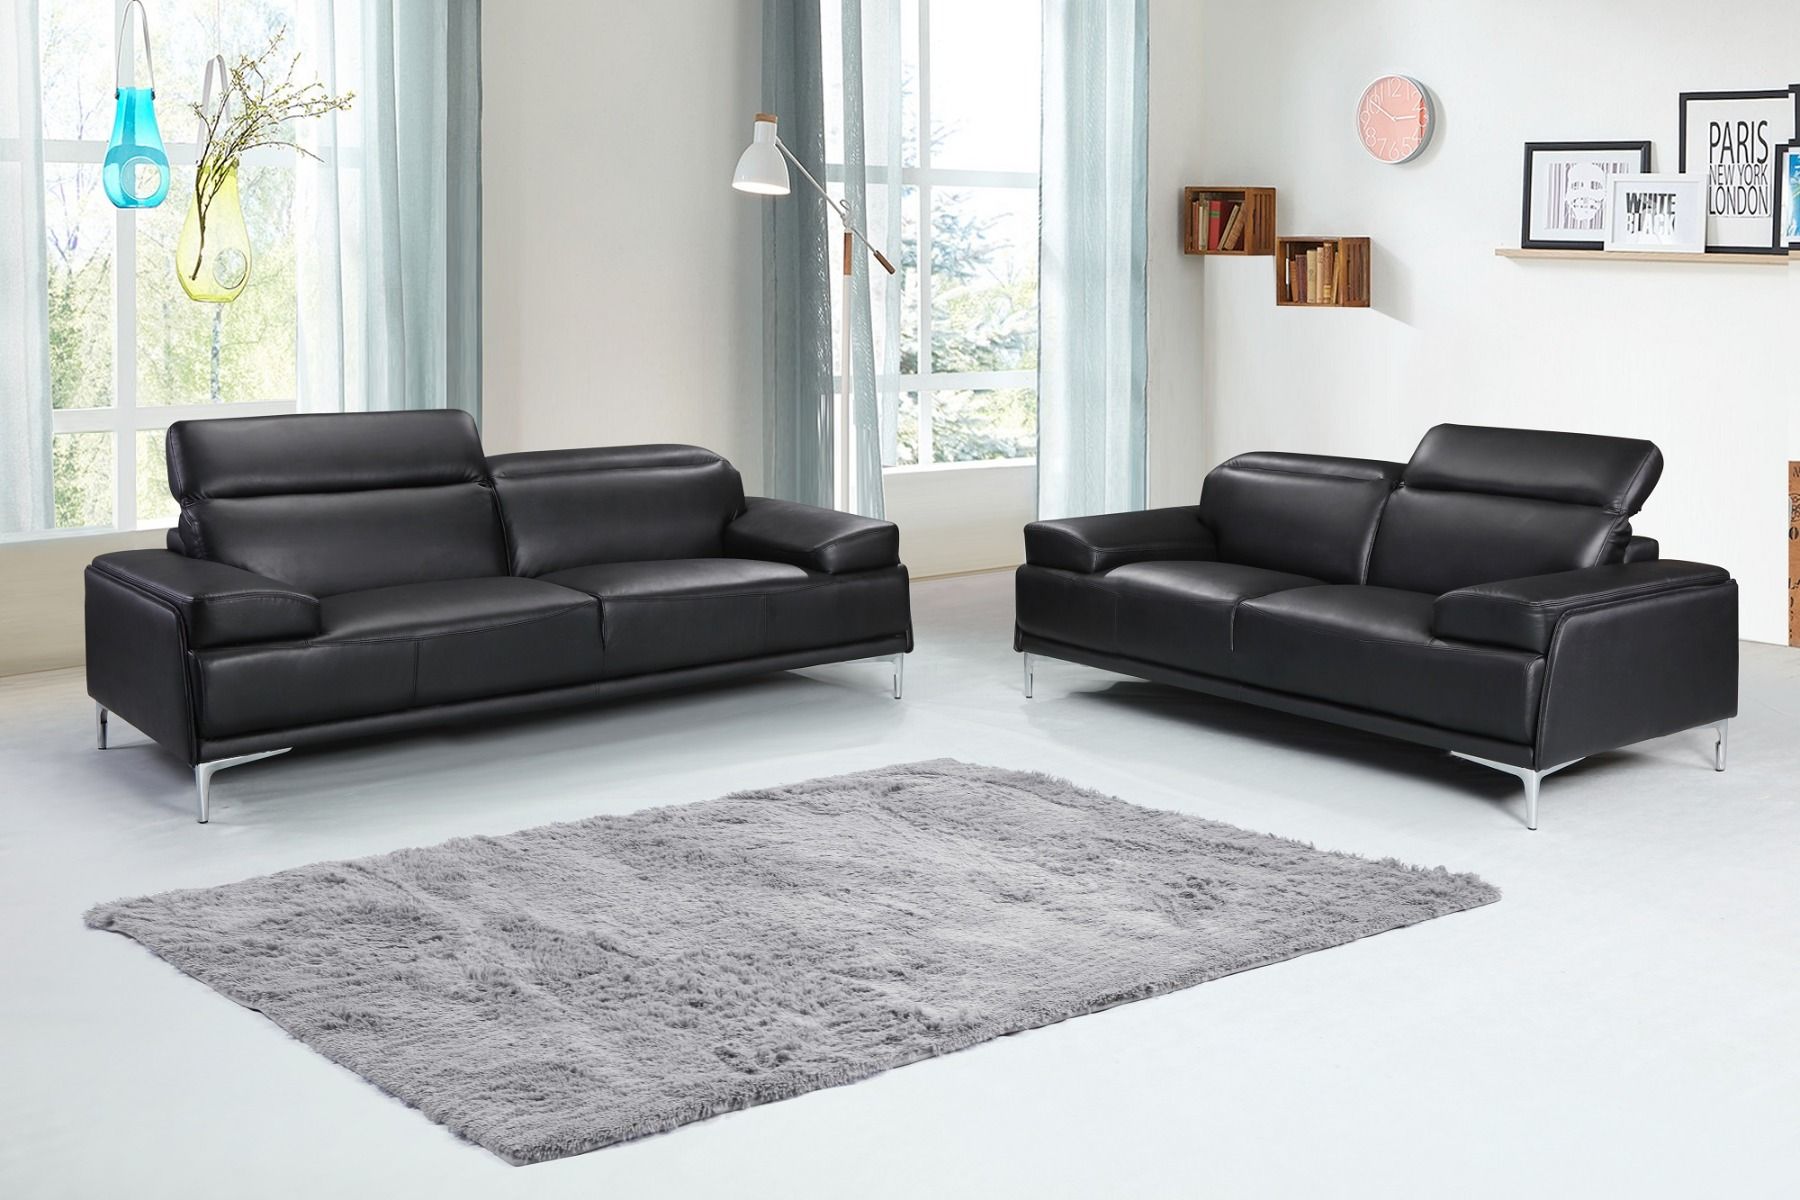 Nicolo Living Room Set Black Leather Sofa And Loveseat Collection,Dragon Lizard Pokemon